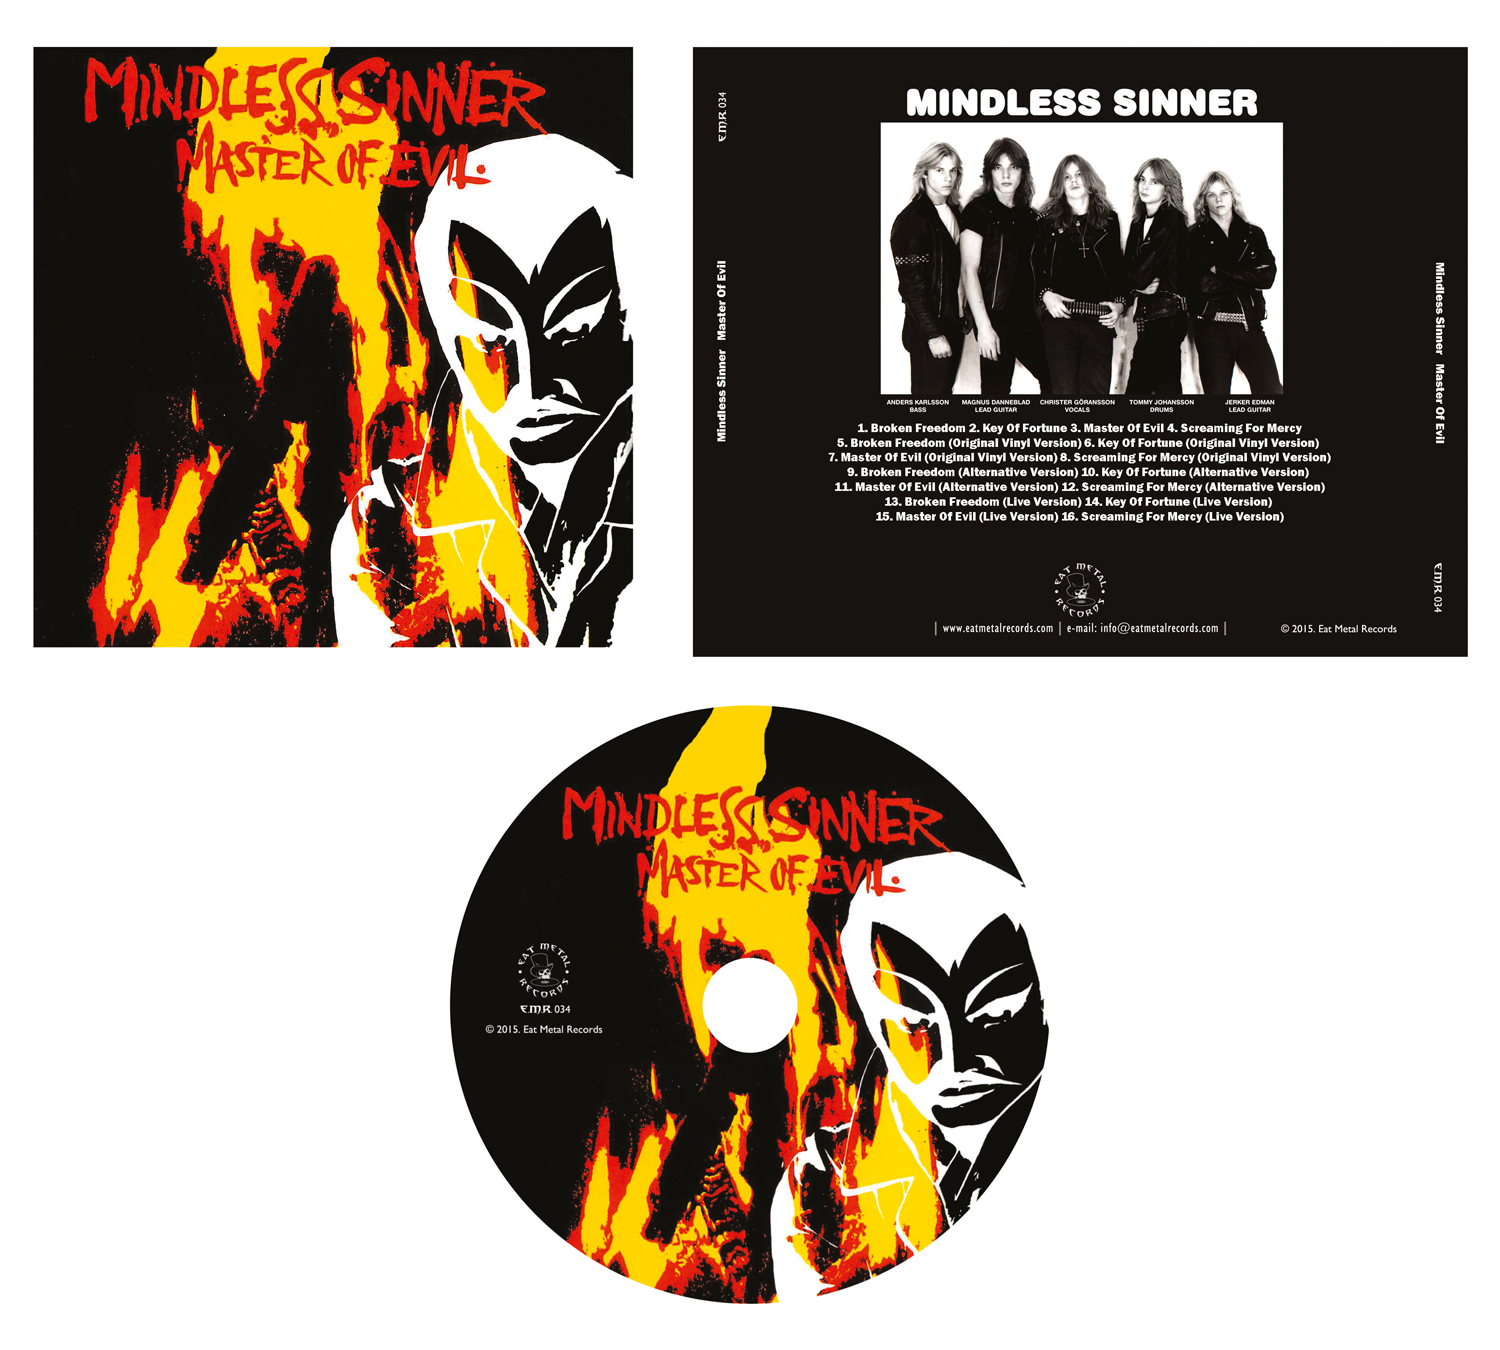 MINDLESS SINNER Master of evil CD (SEALED) LAST COPIES!